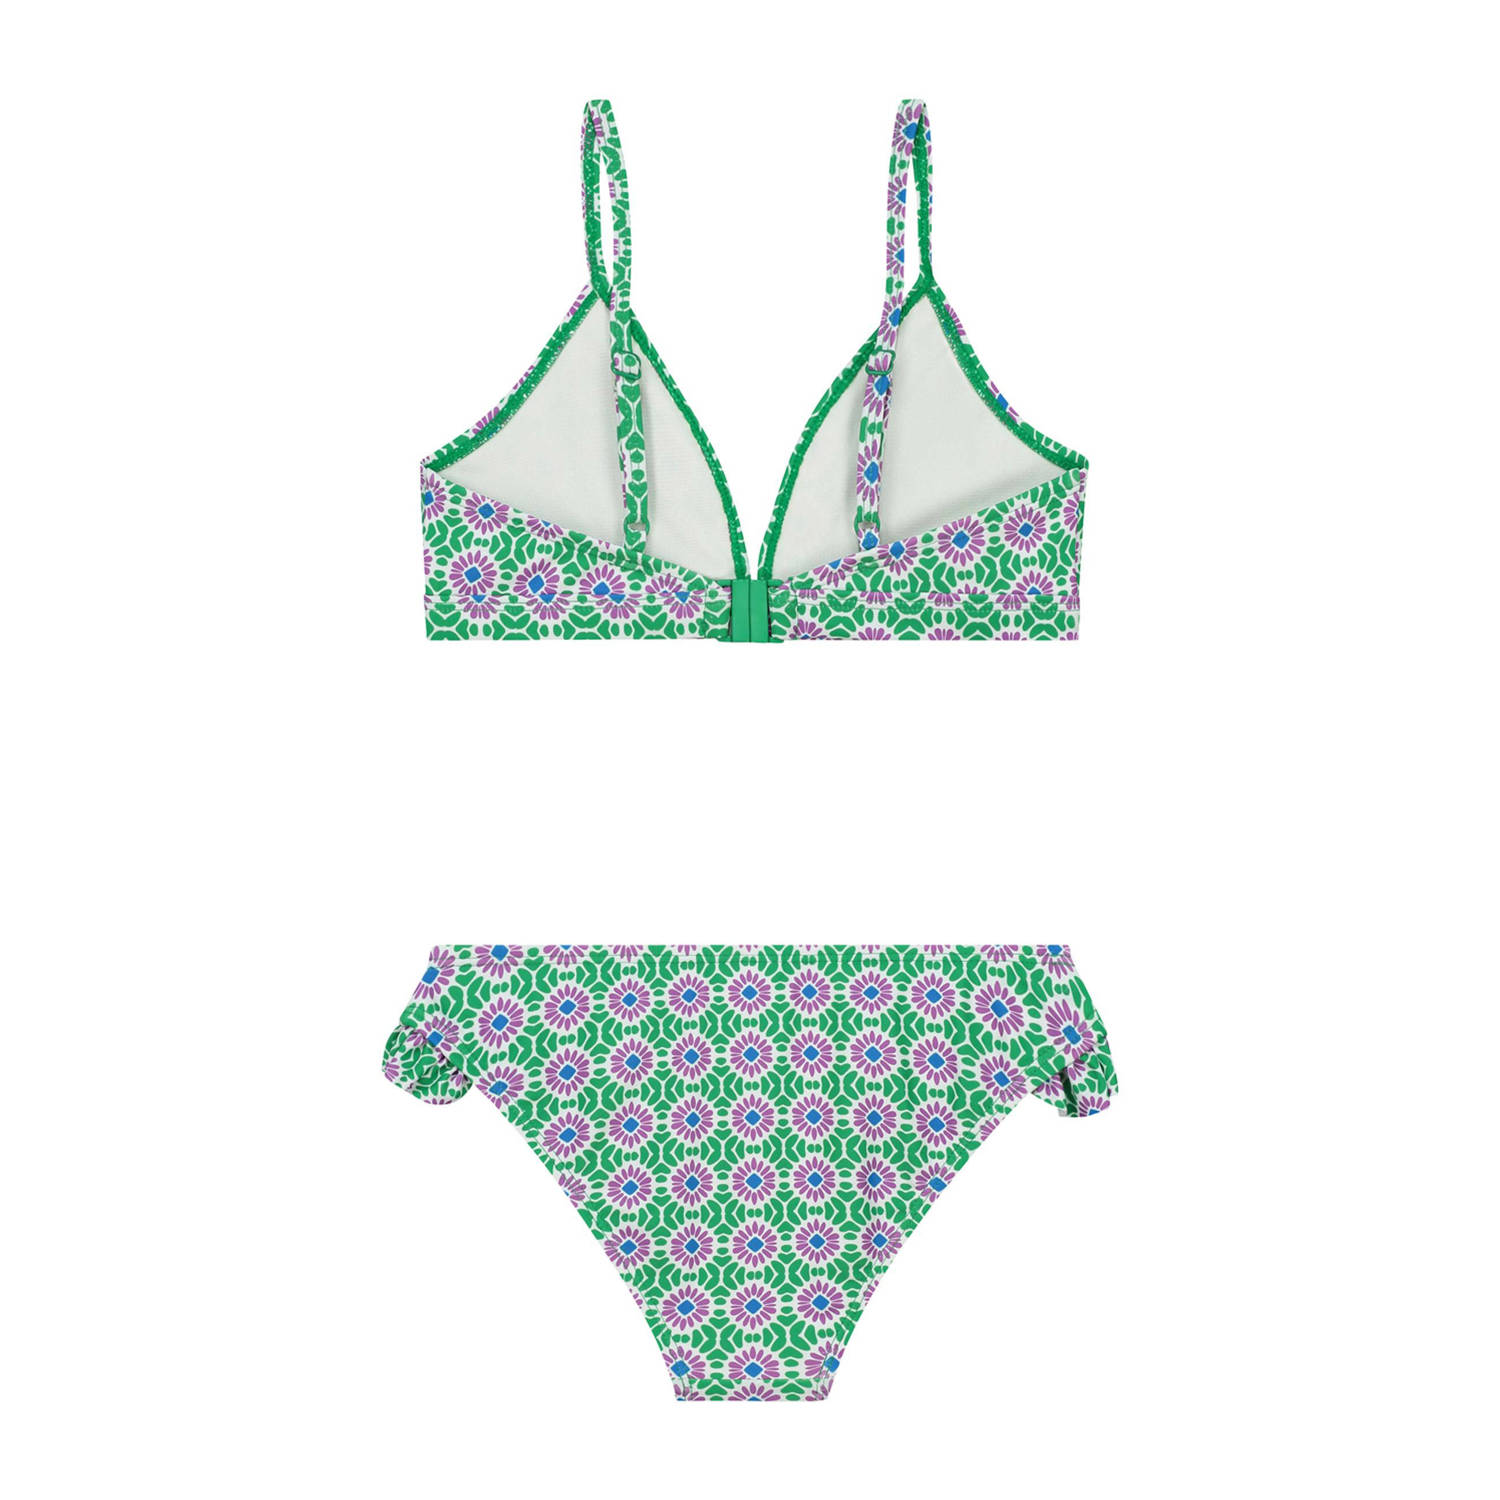 Shiwi triangel bikini Blake met ruches groen paars wit